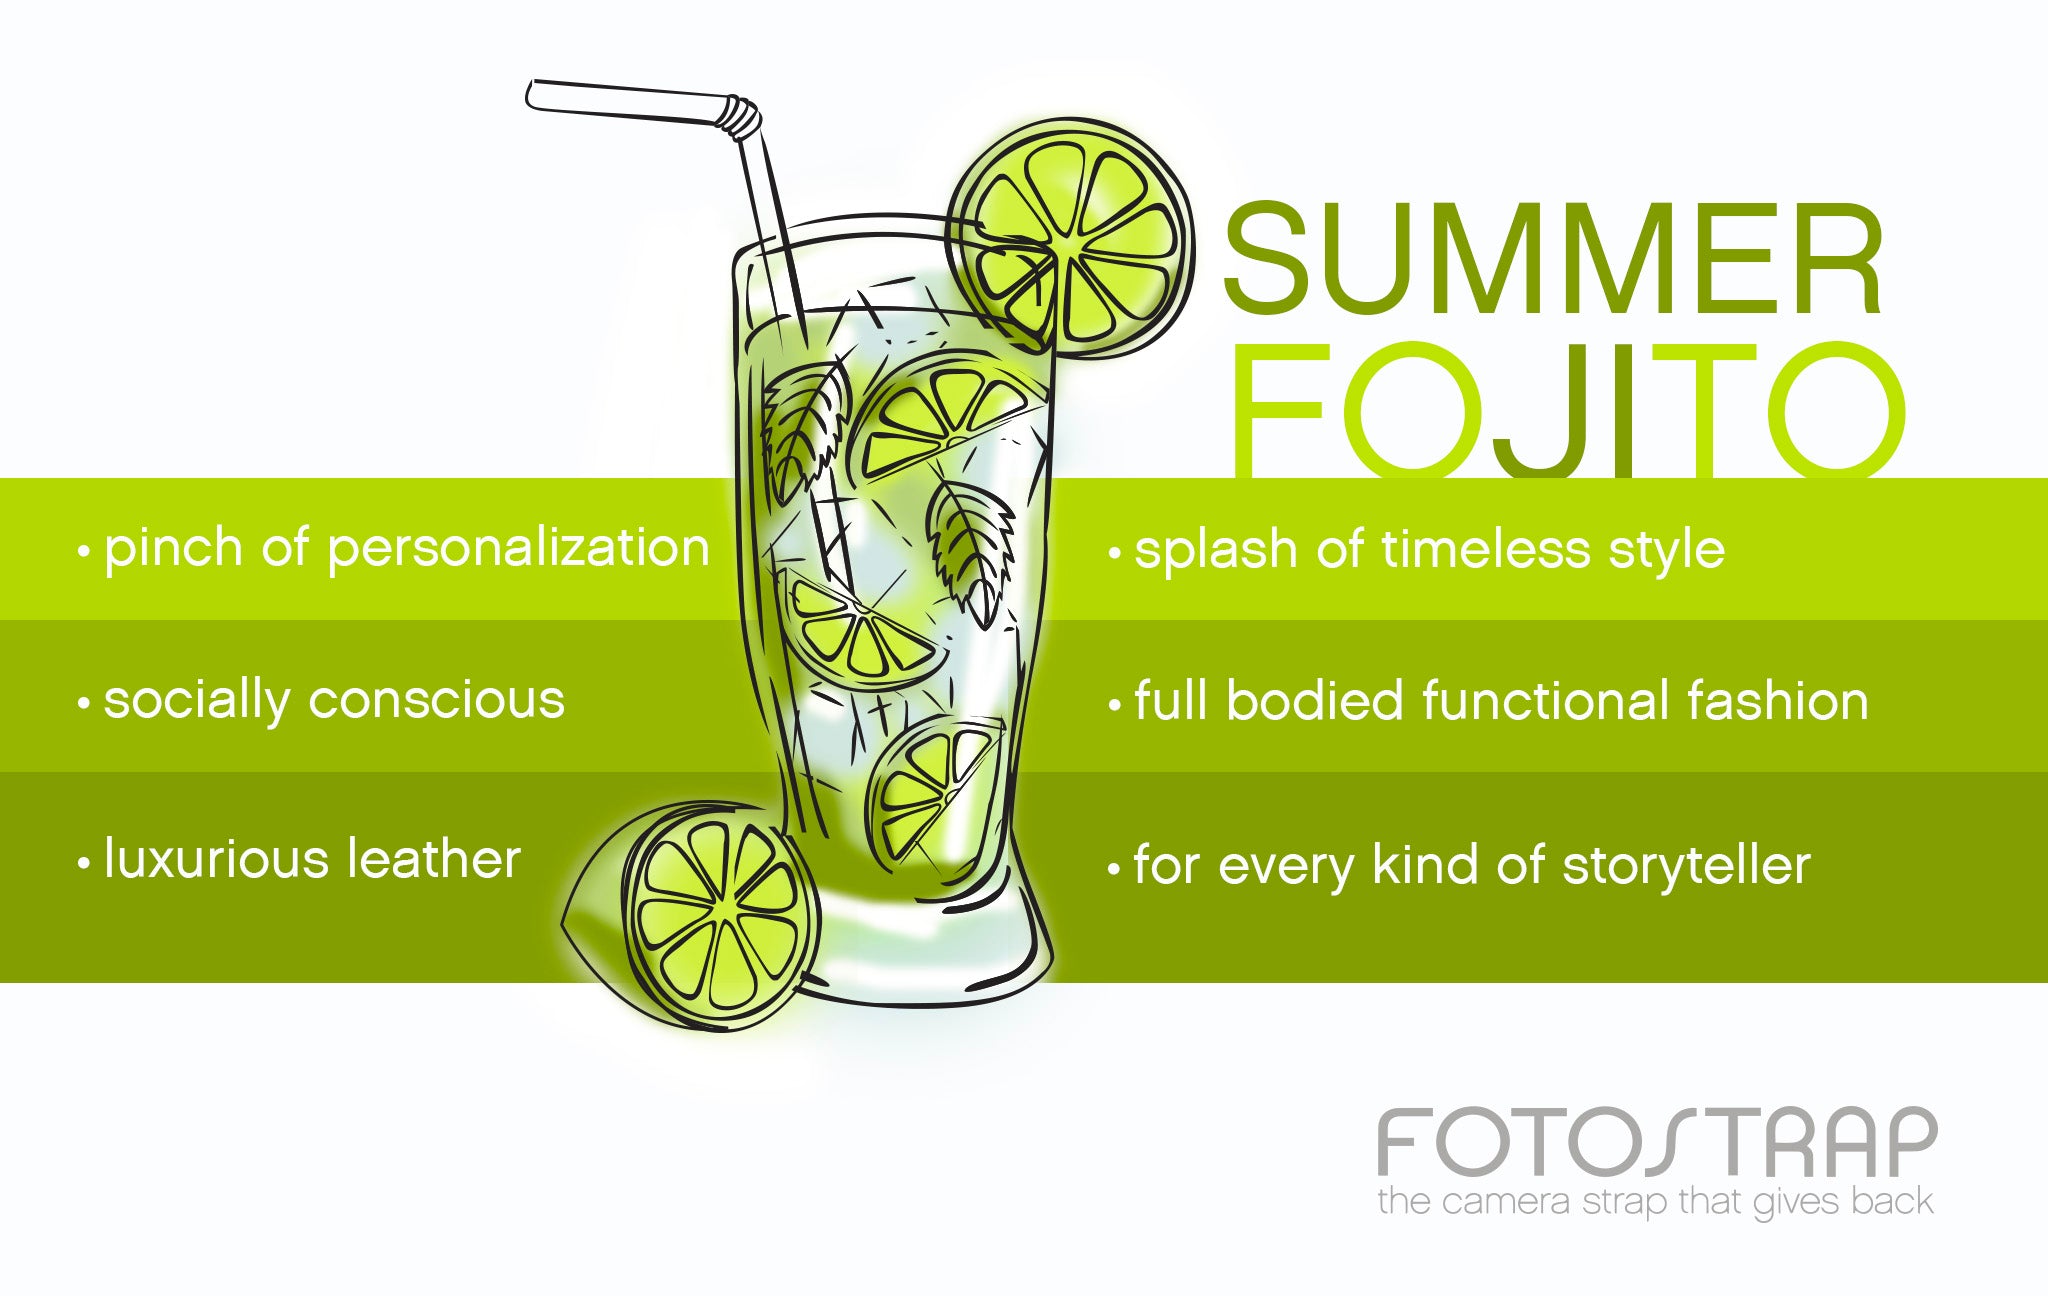 Summer Fojito | FOTO Blog